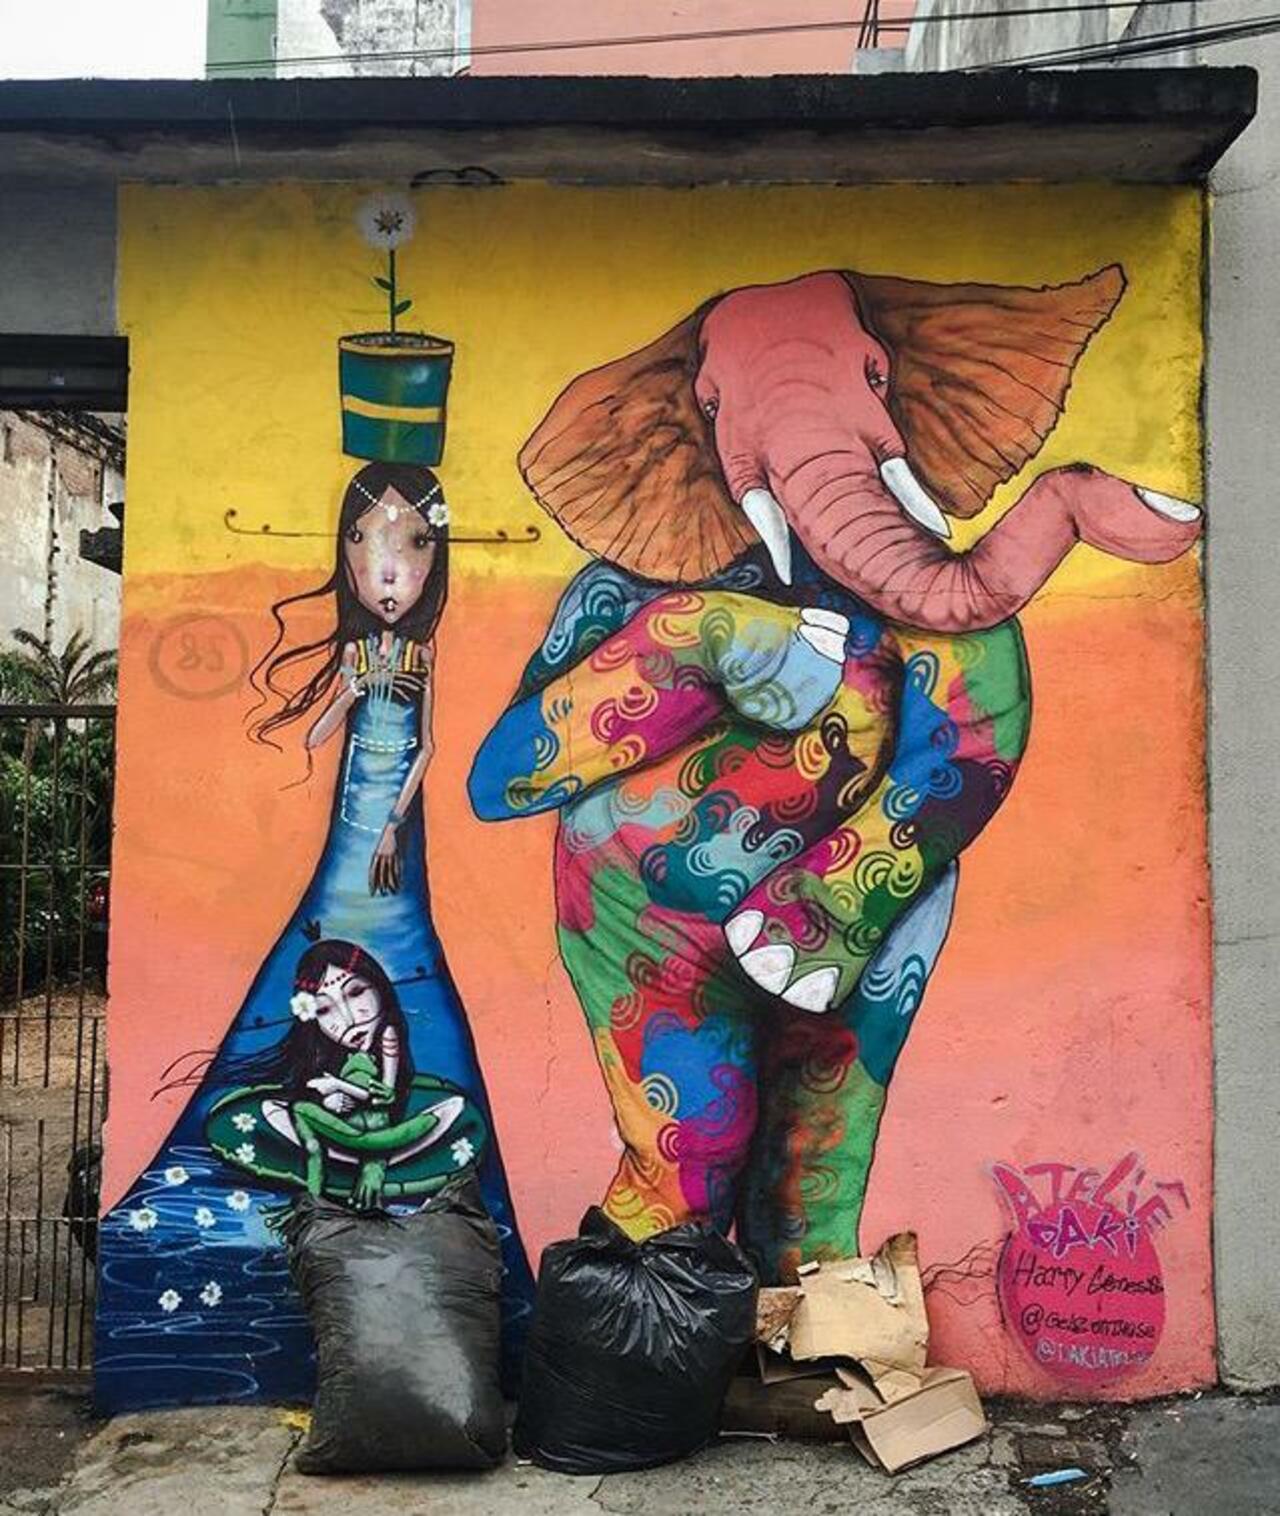 Street Art by Harry Geneis & Gelson in São Paulo #art #mural #graffiti #streetart http://t.co/SlLbhuMZfD … http://twitter.com/charlesjackso14/status/648017748258328576